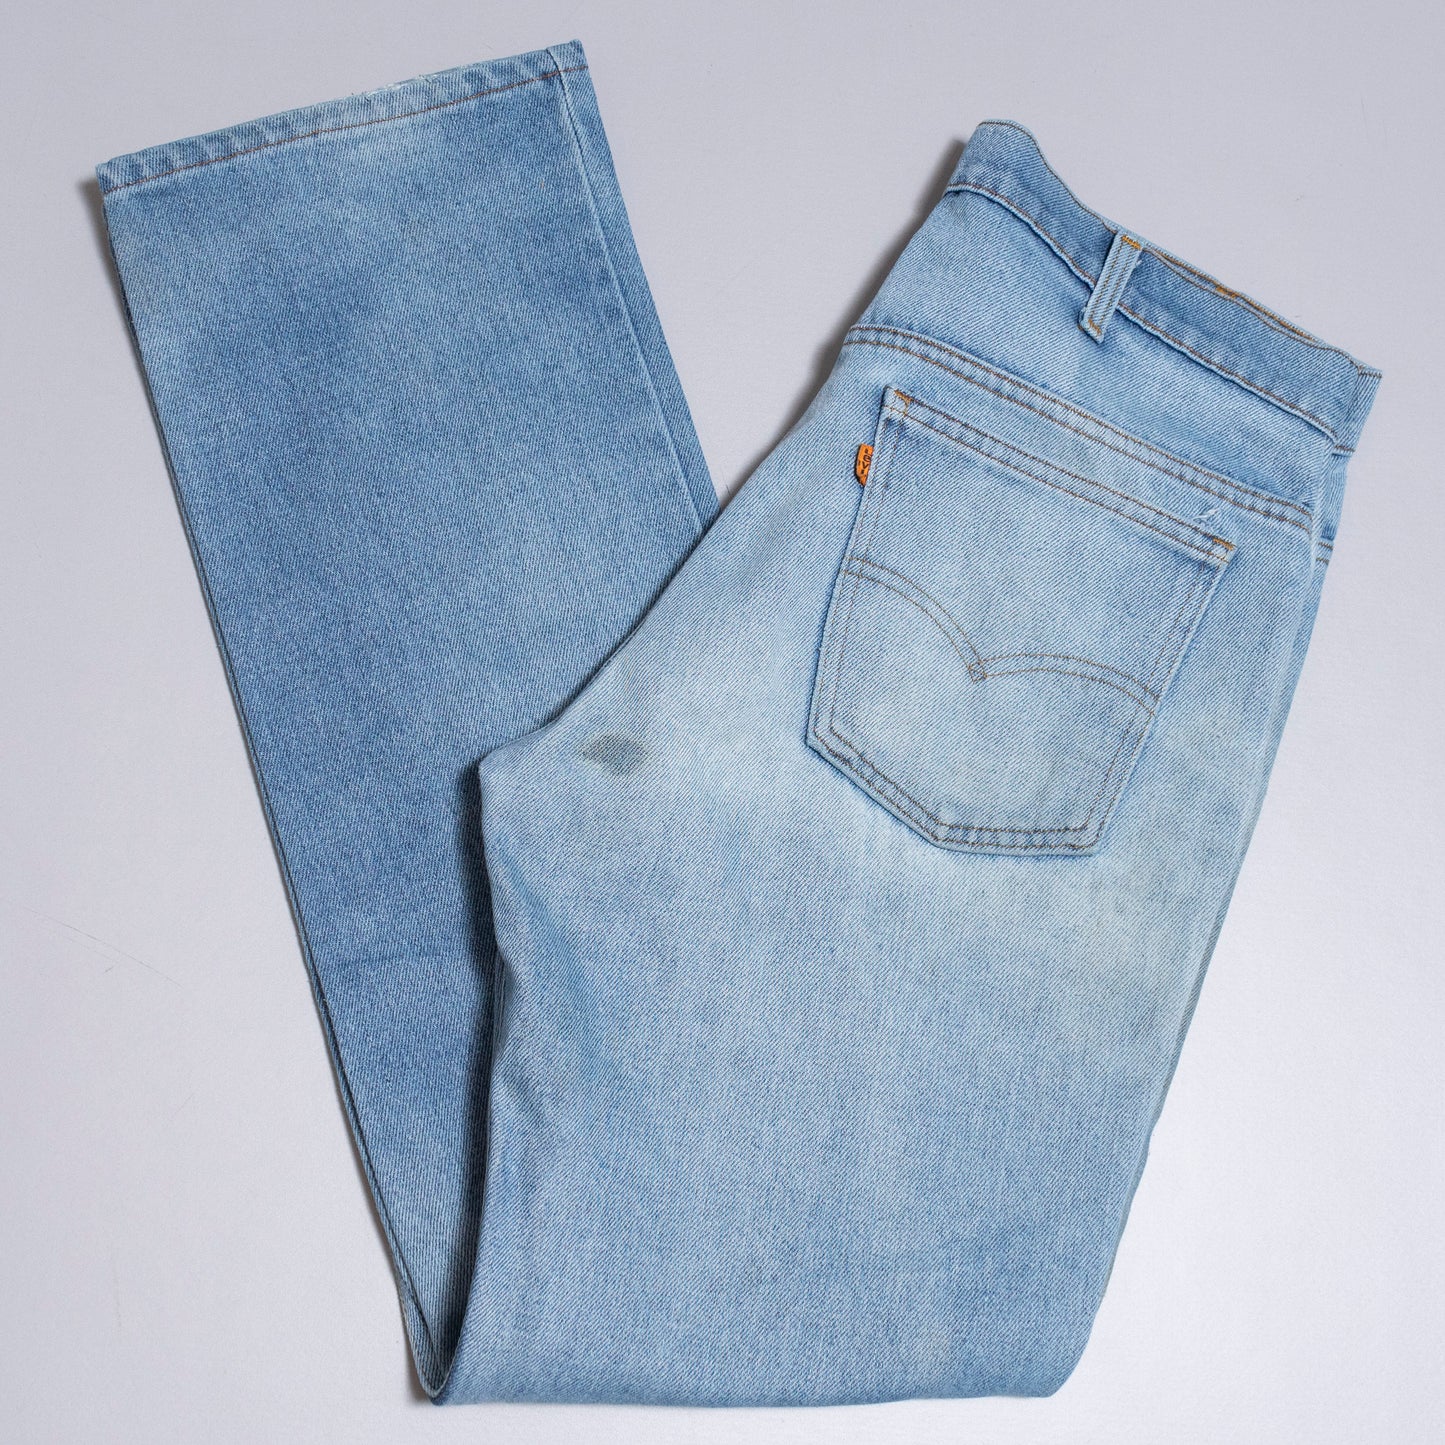 Levis Orange Tab Jeans, 32/32